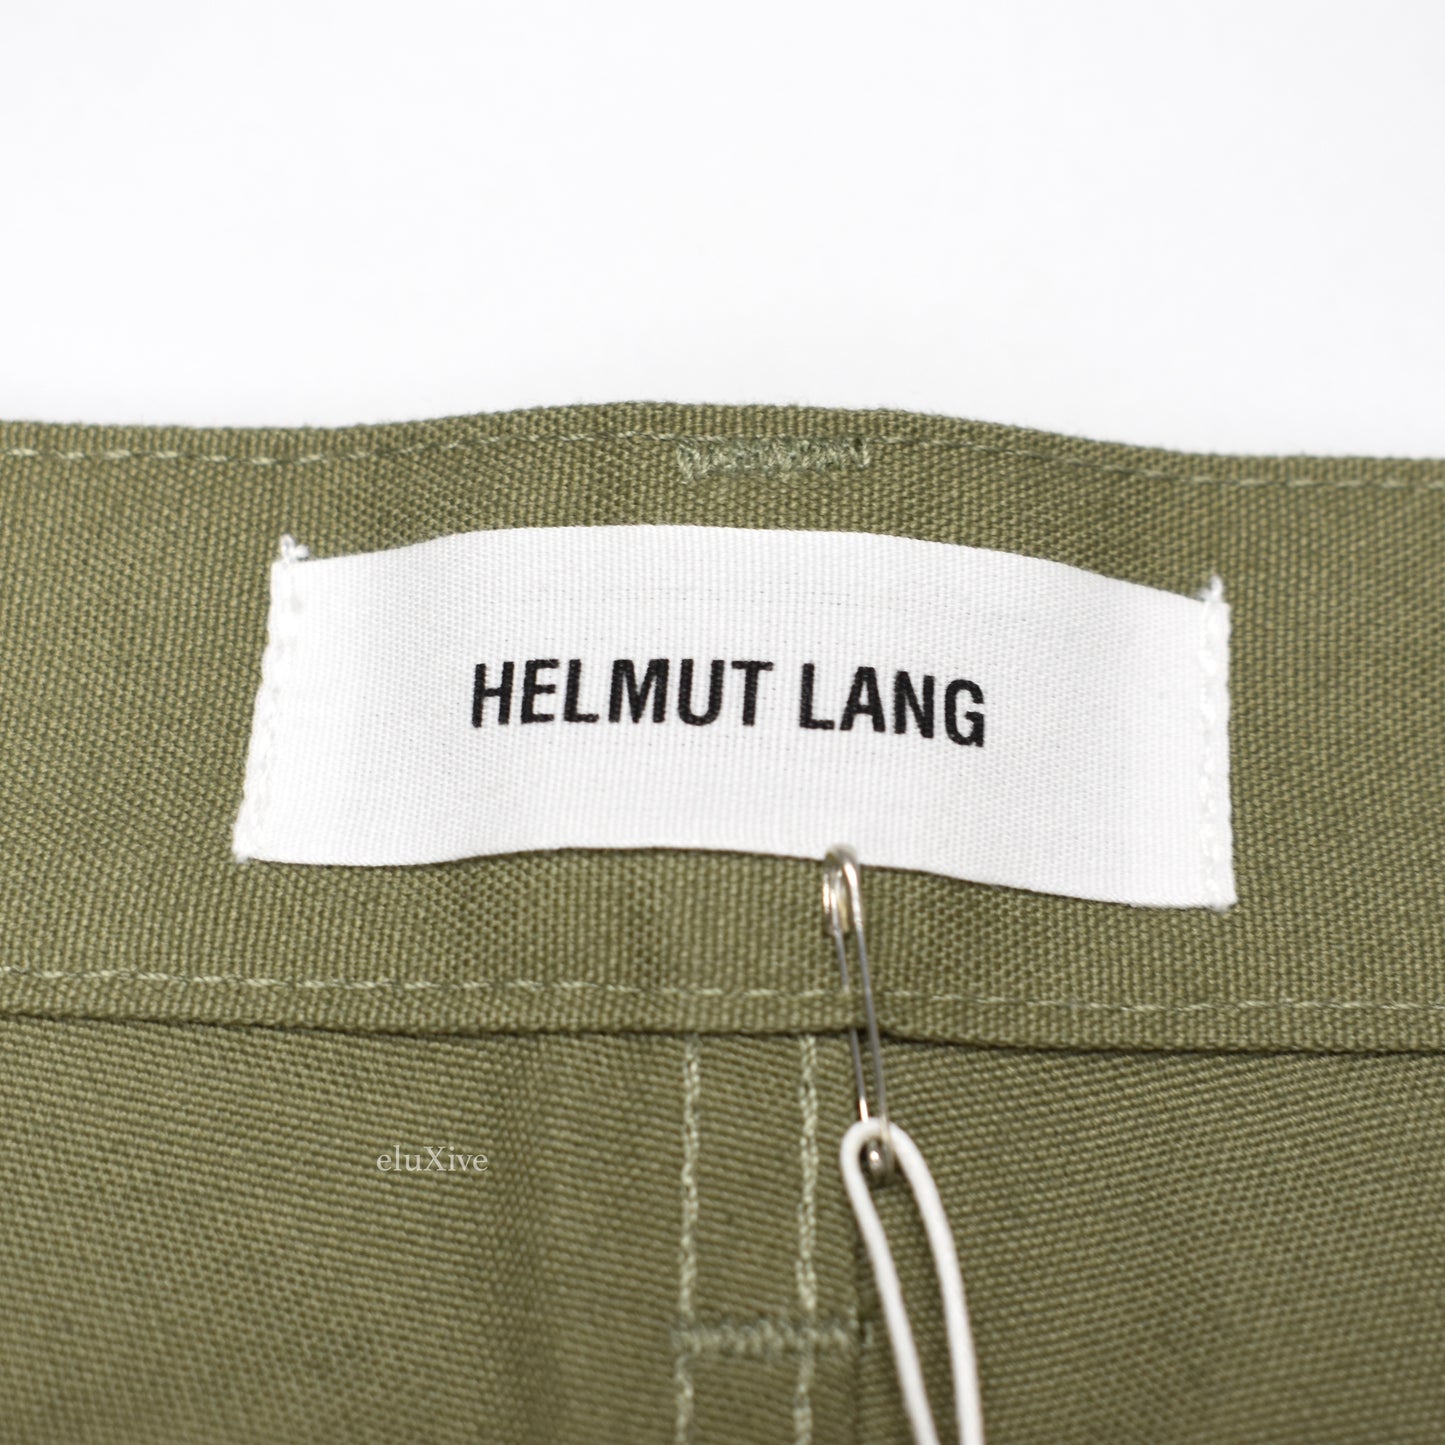 Helmut Lang - Green Military Canvas Painter Pants